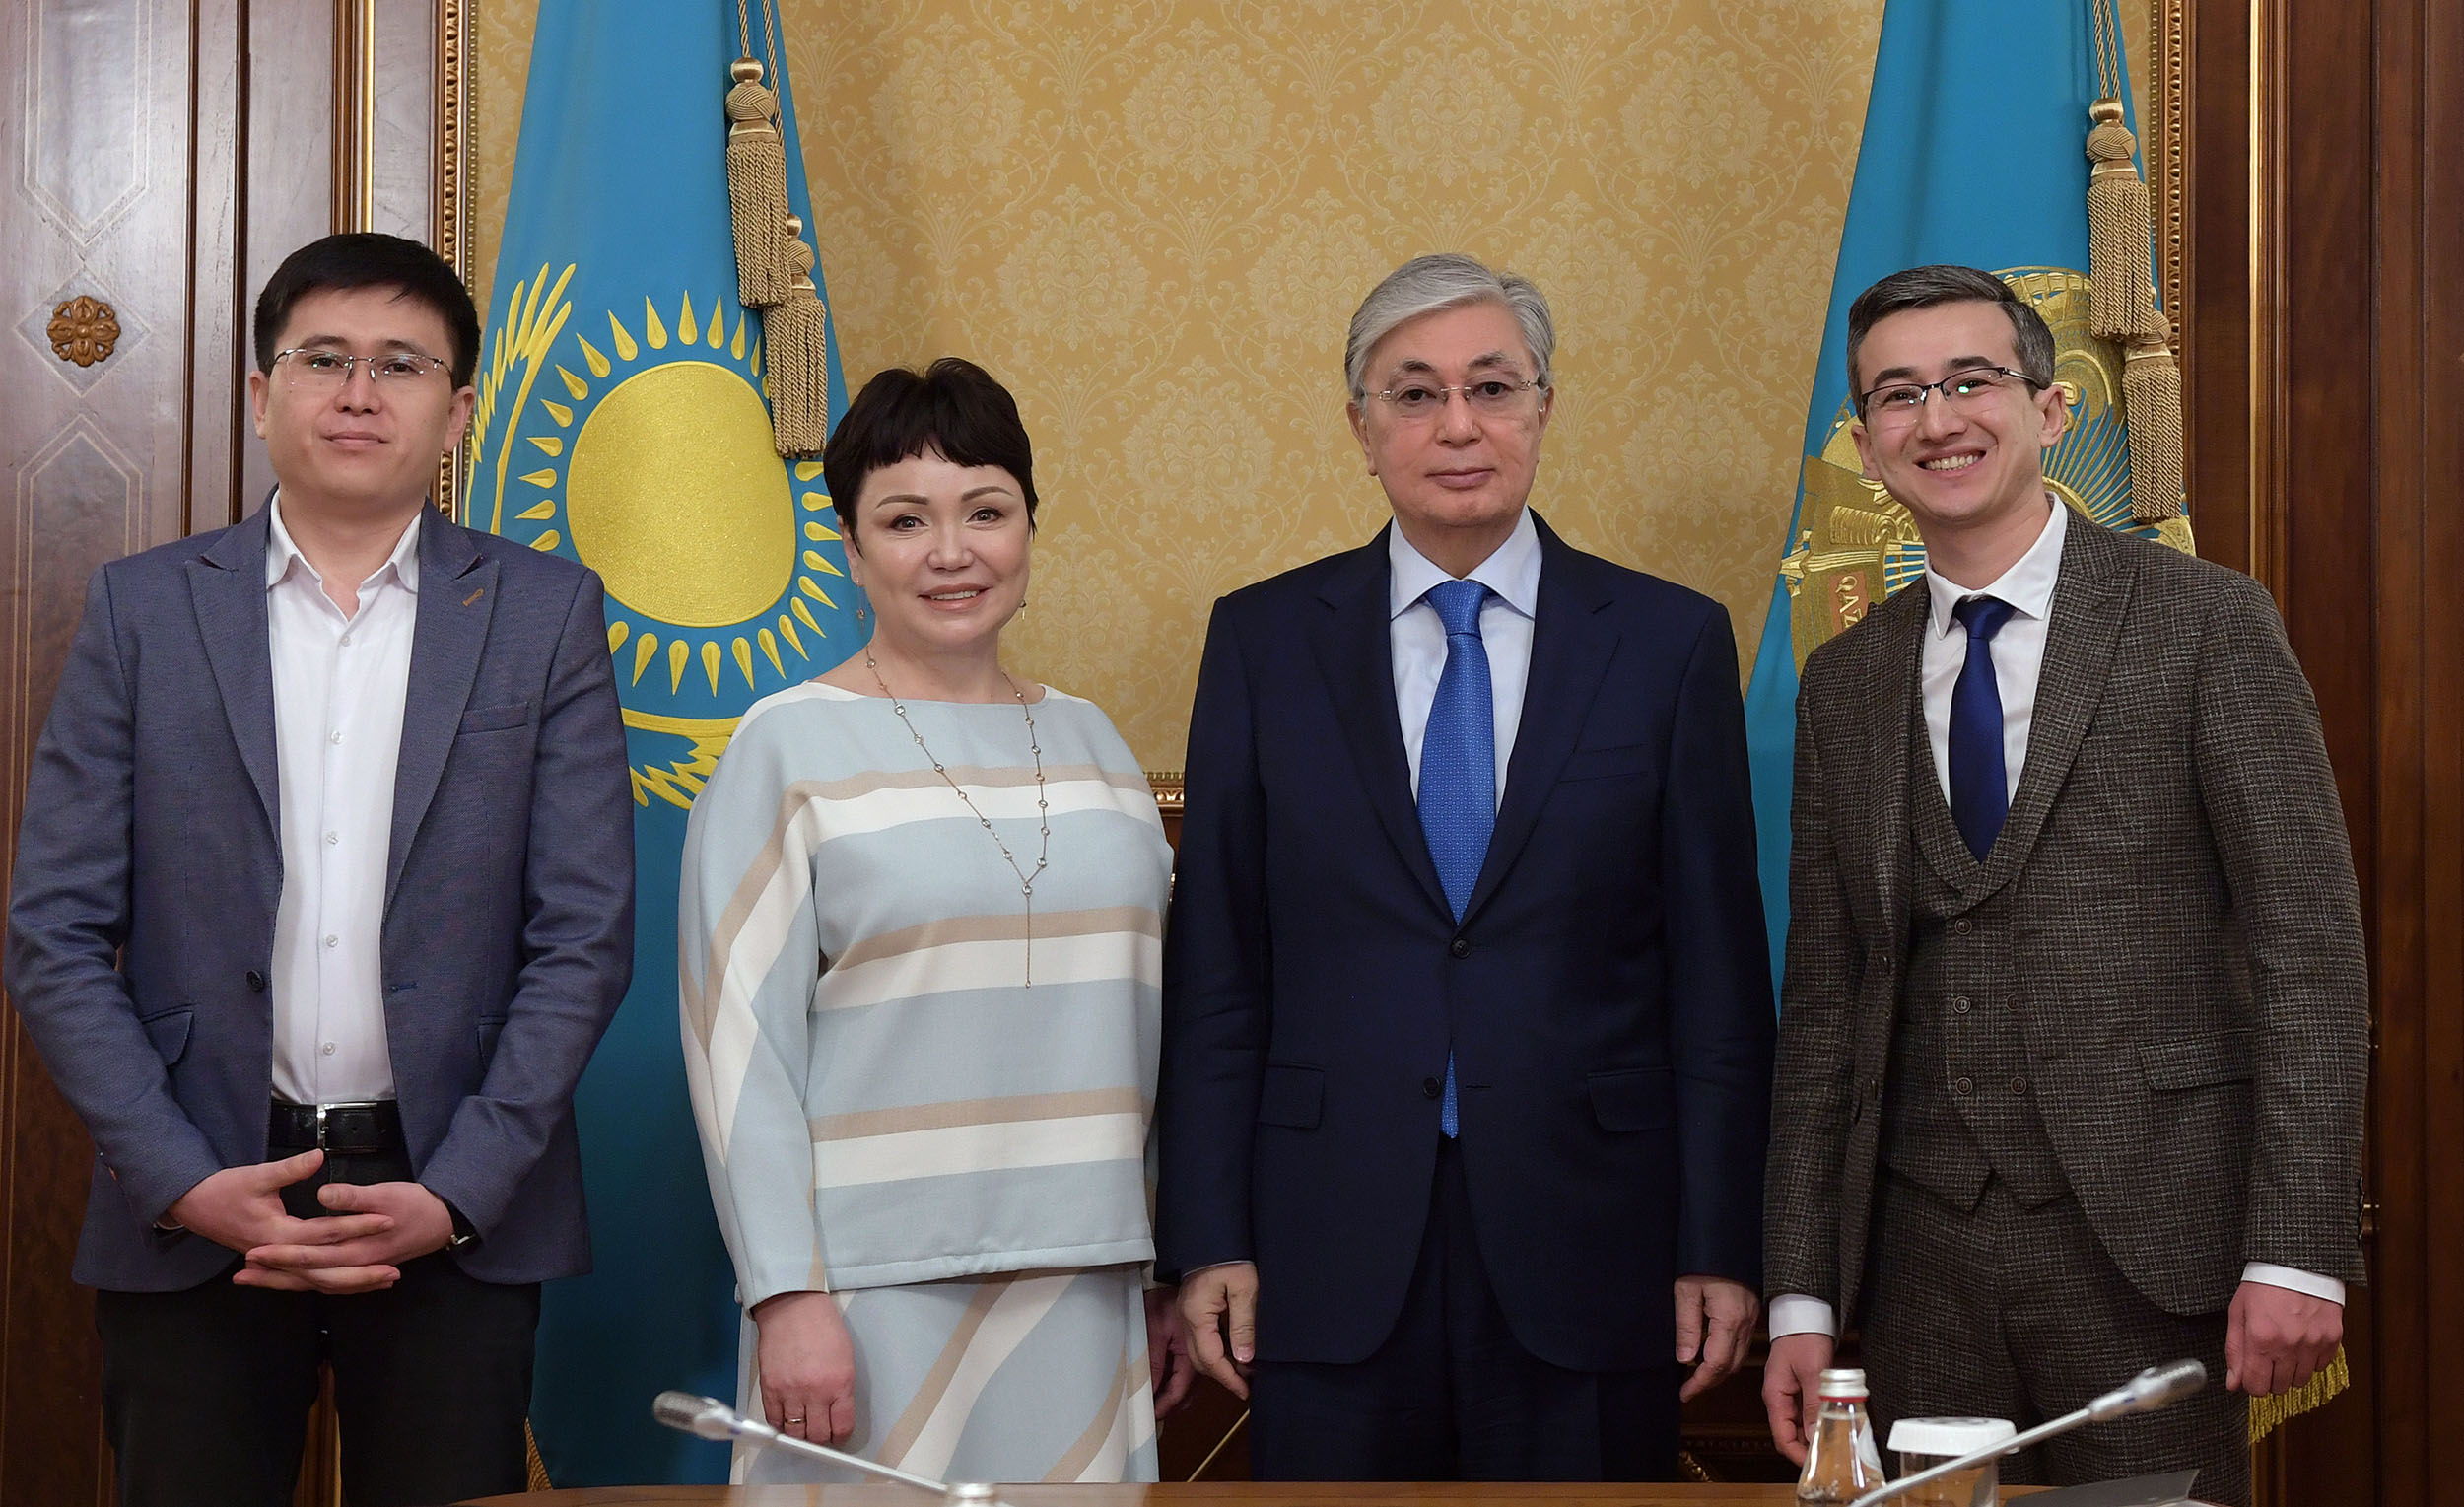 Kazakh President meets with social entrepreneurs